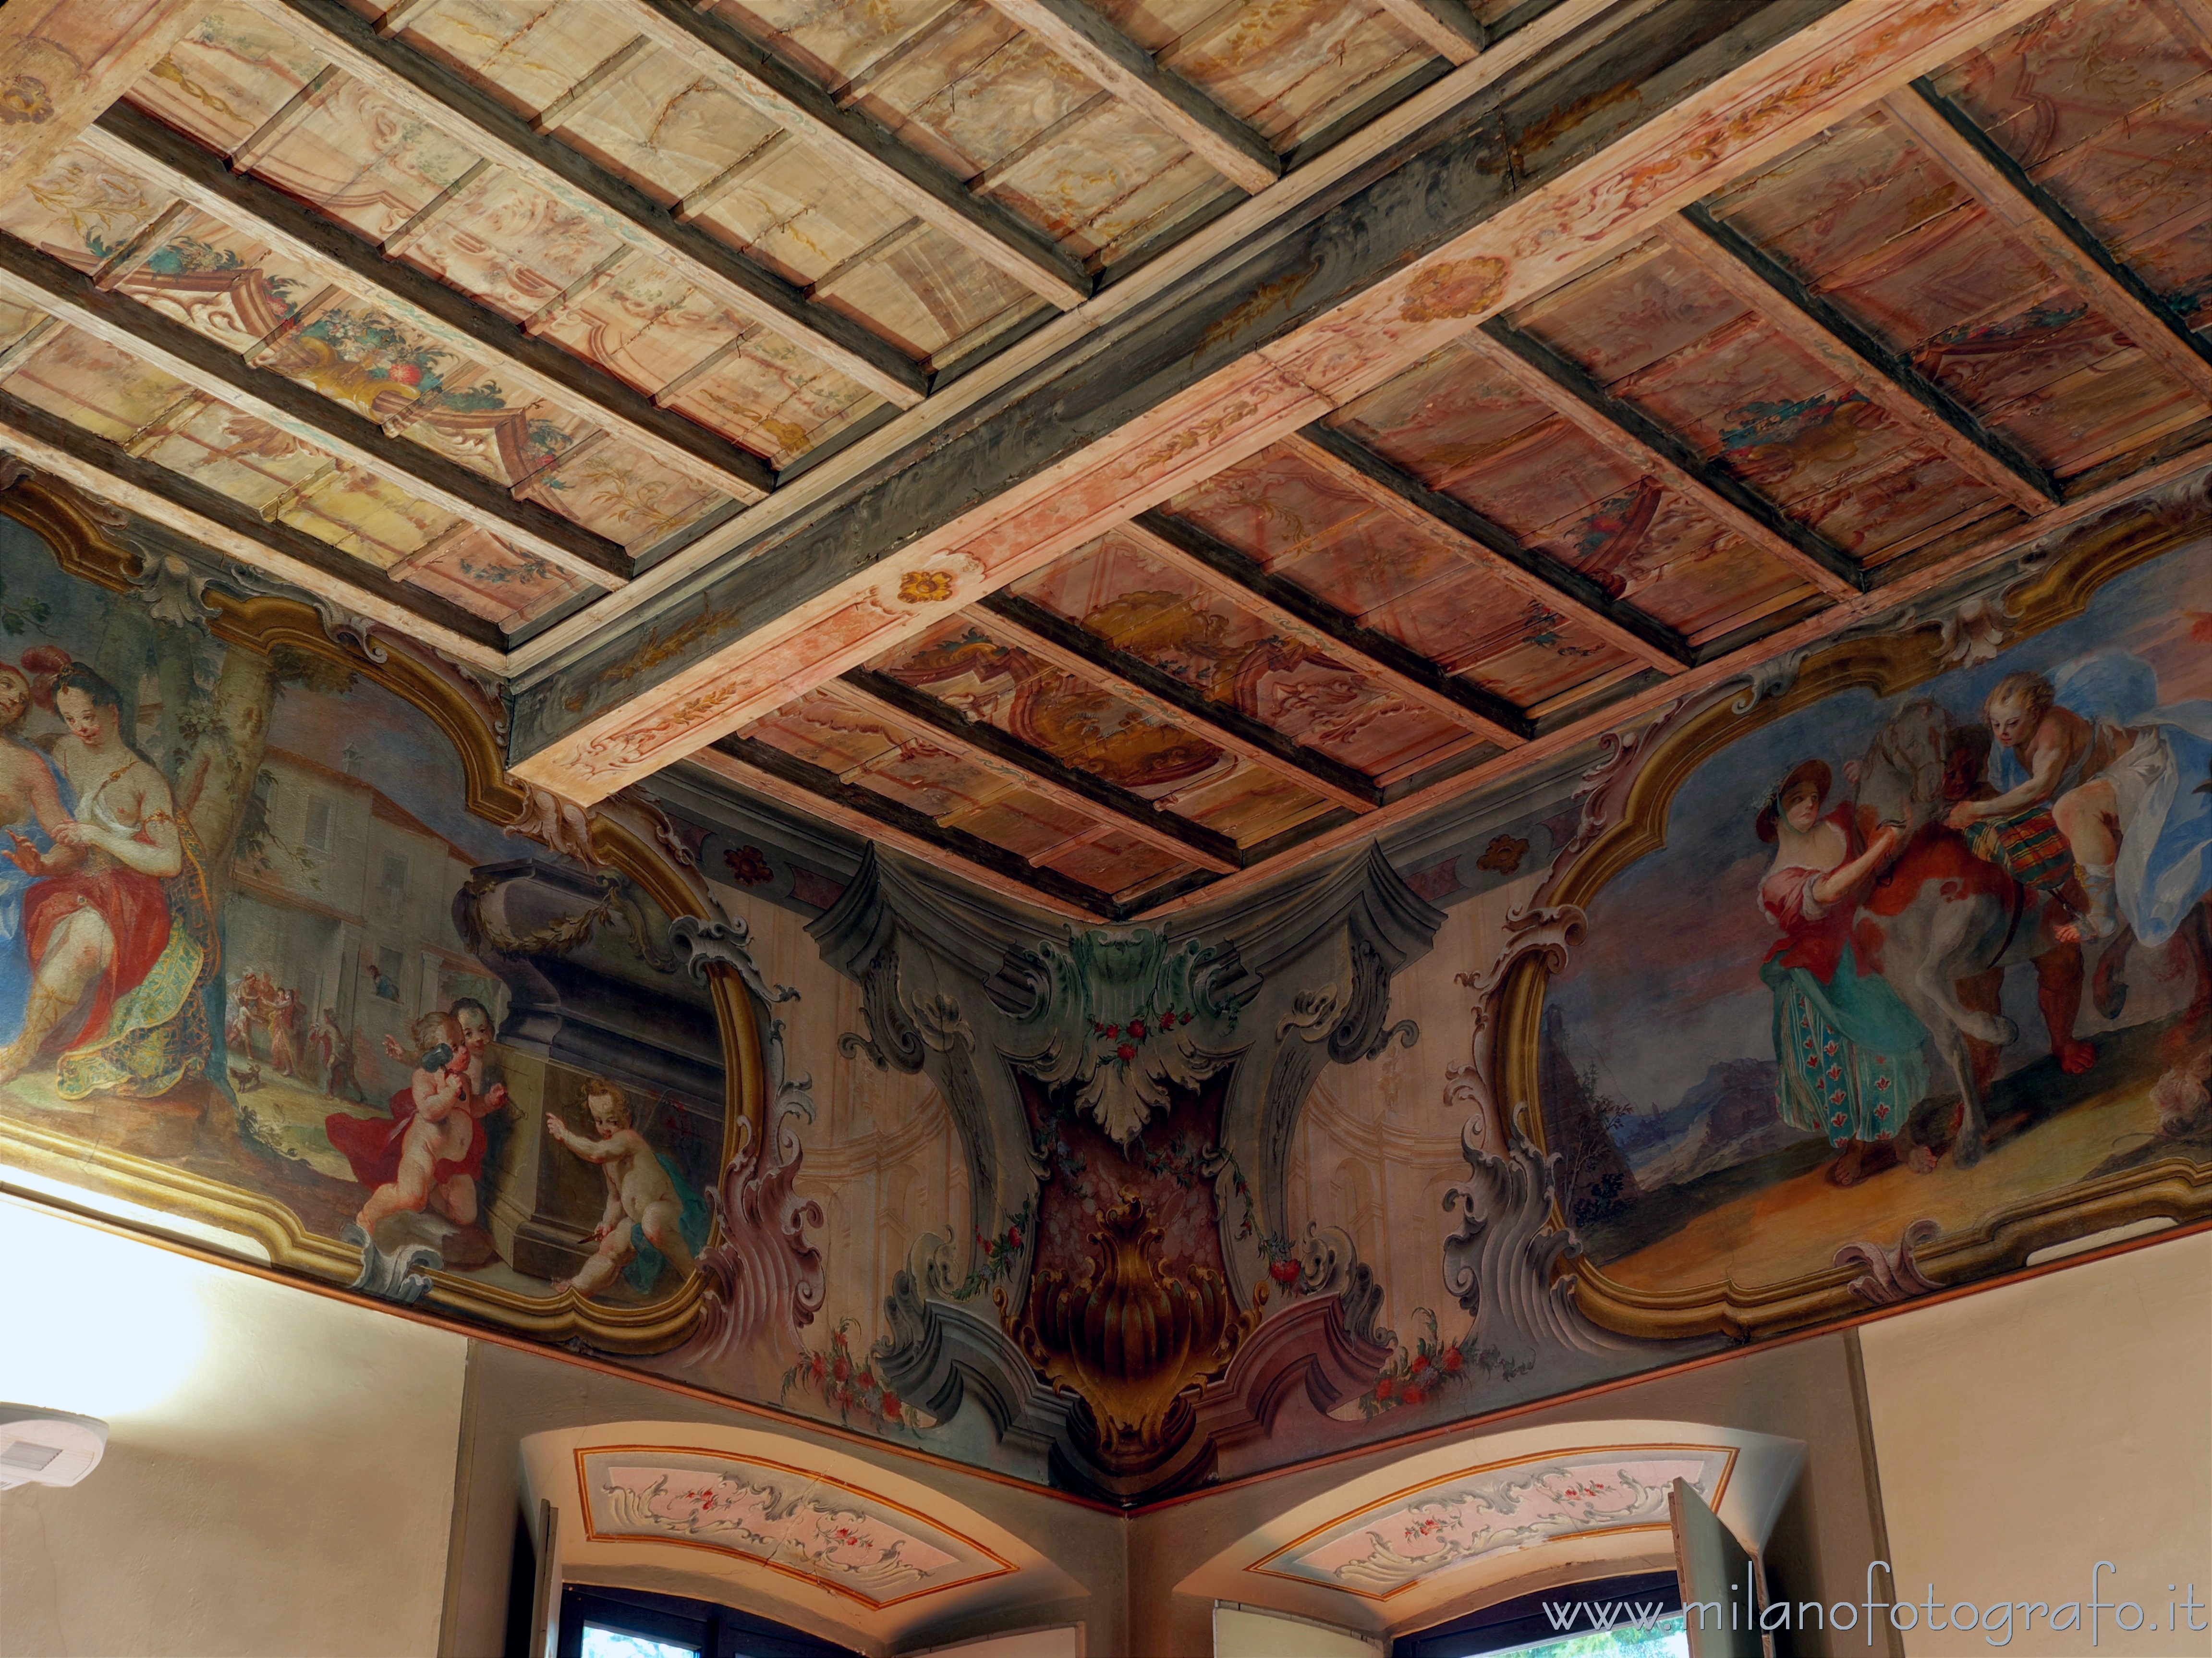 Vimercate (Monza e Brianza, Italy): Frescoes in the hall of Angelica and Medoro of Palazzo Trotti - Vimercate (Monza e Brianza, Italy)